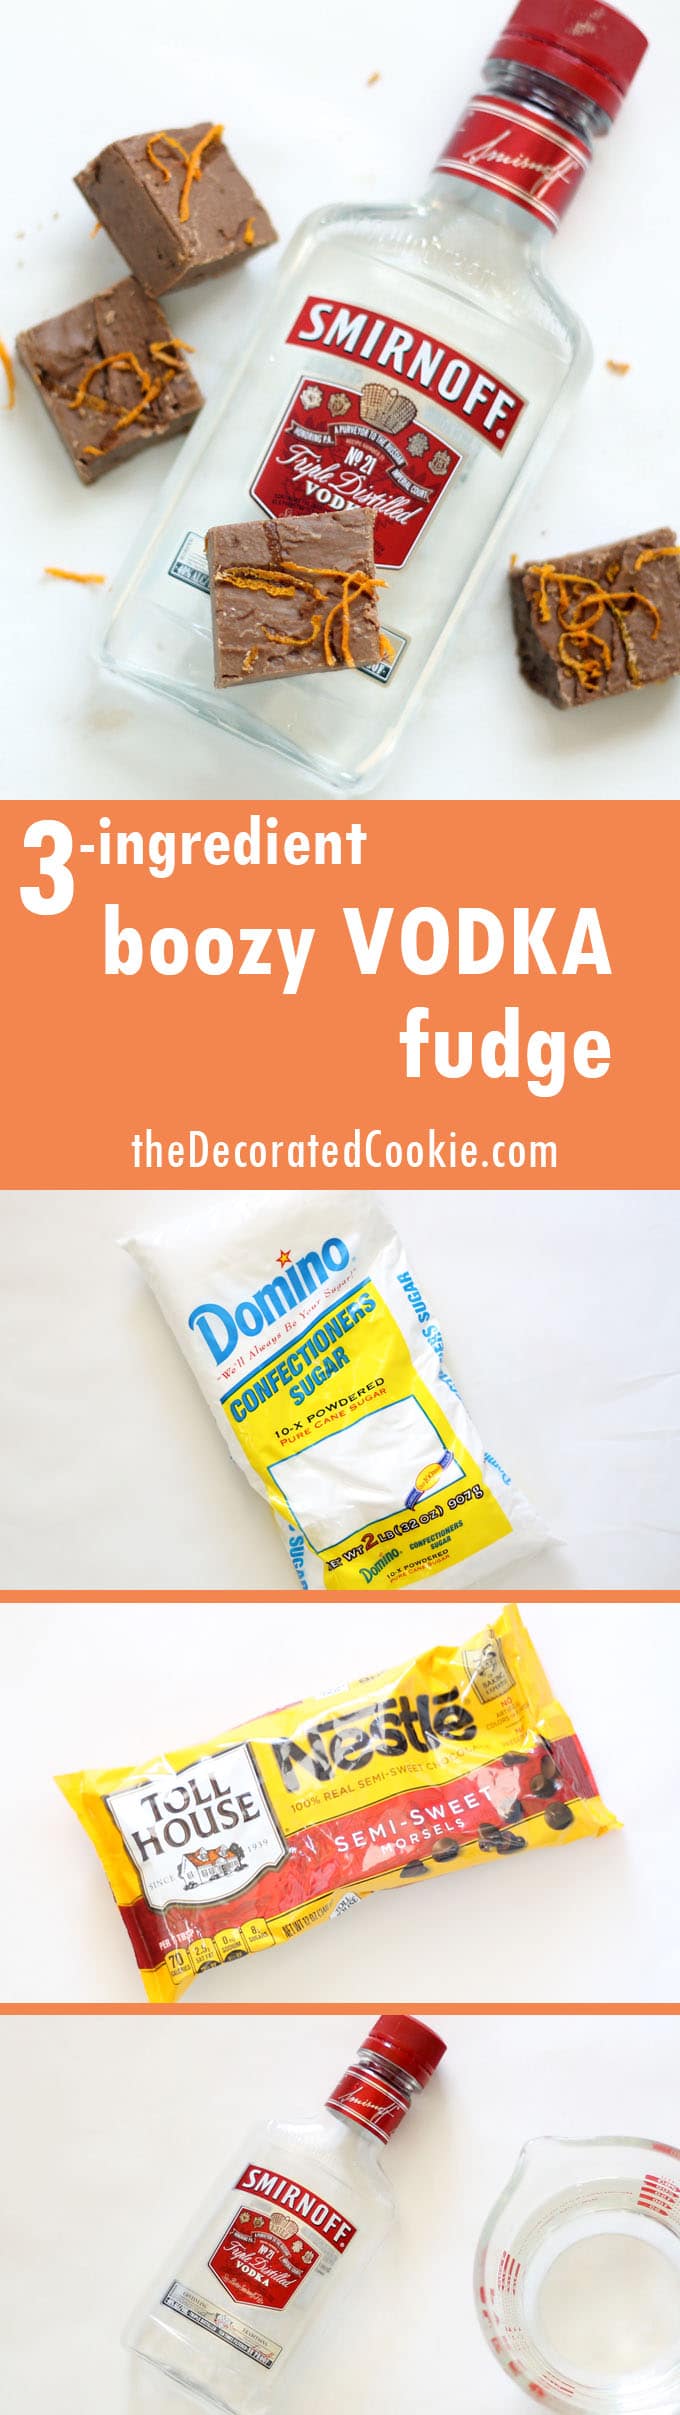 boozy fudge: vodka, chocolate with orange zest 